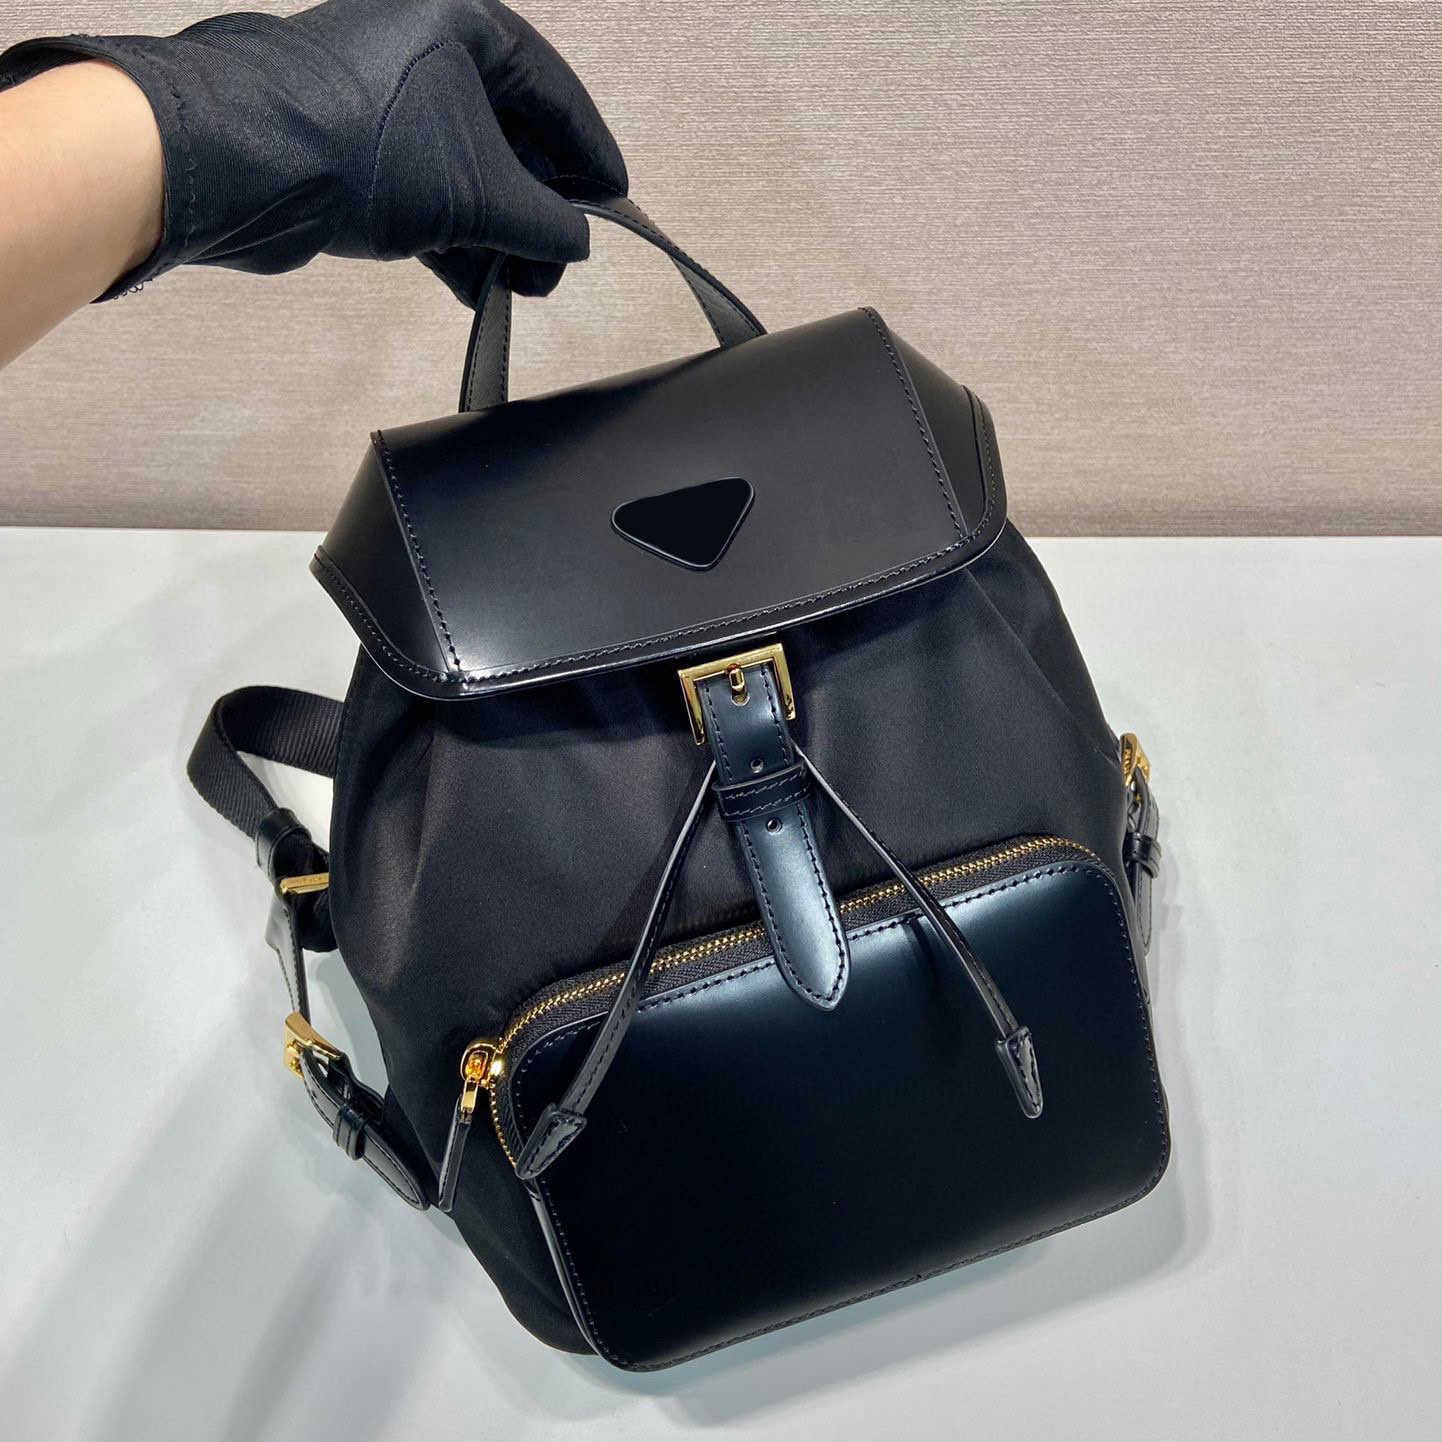 black--120.5*25*11.5cm-can backpack